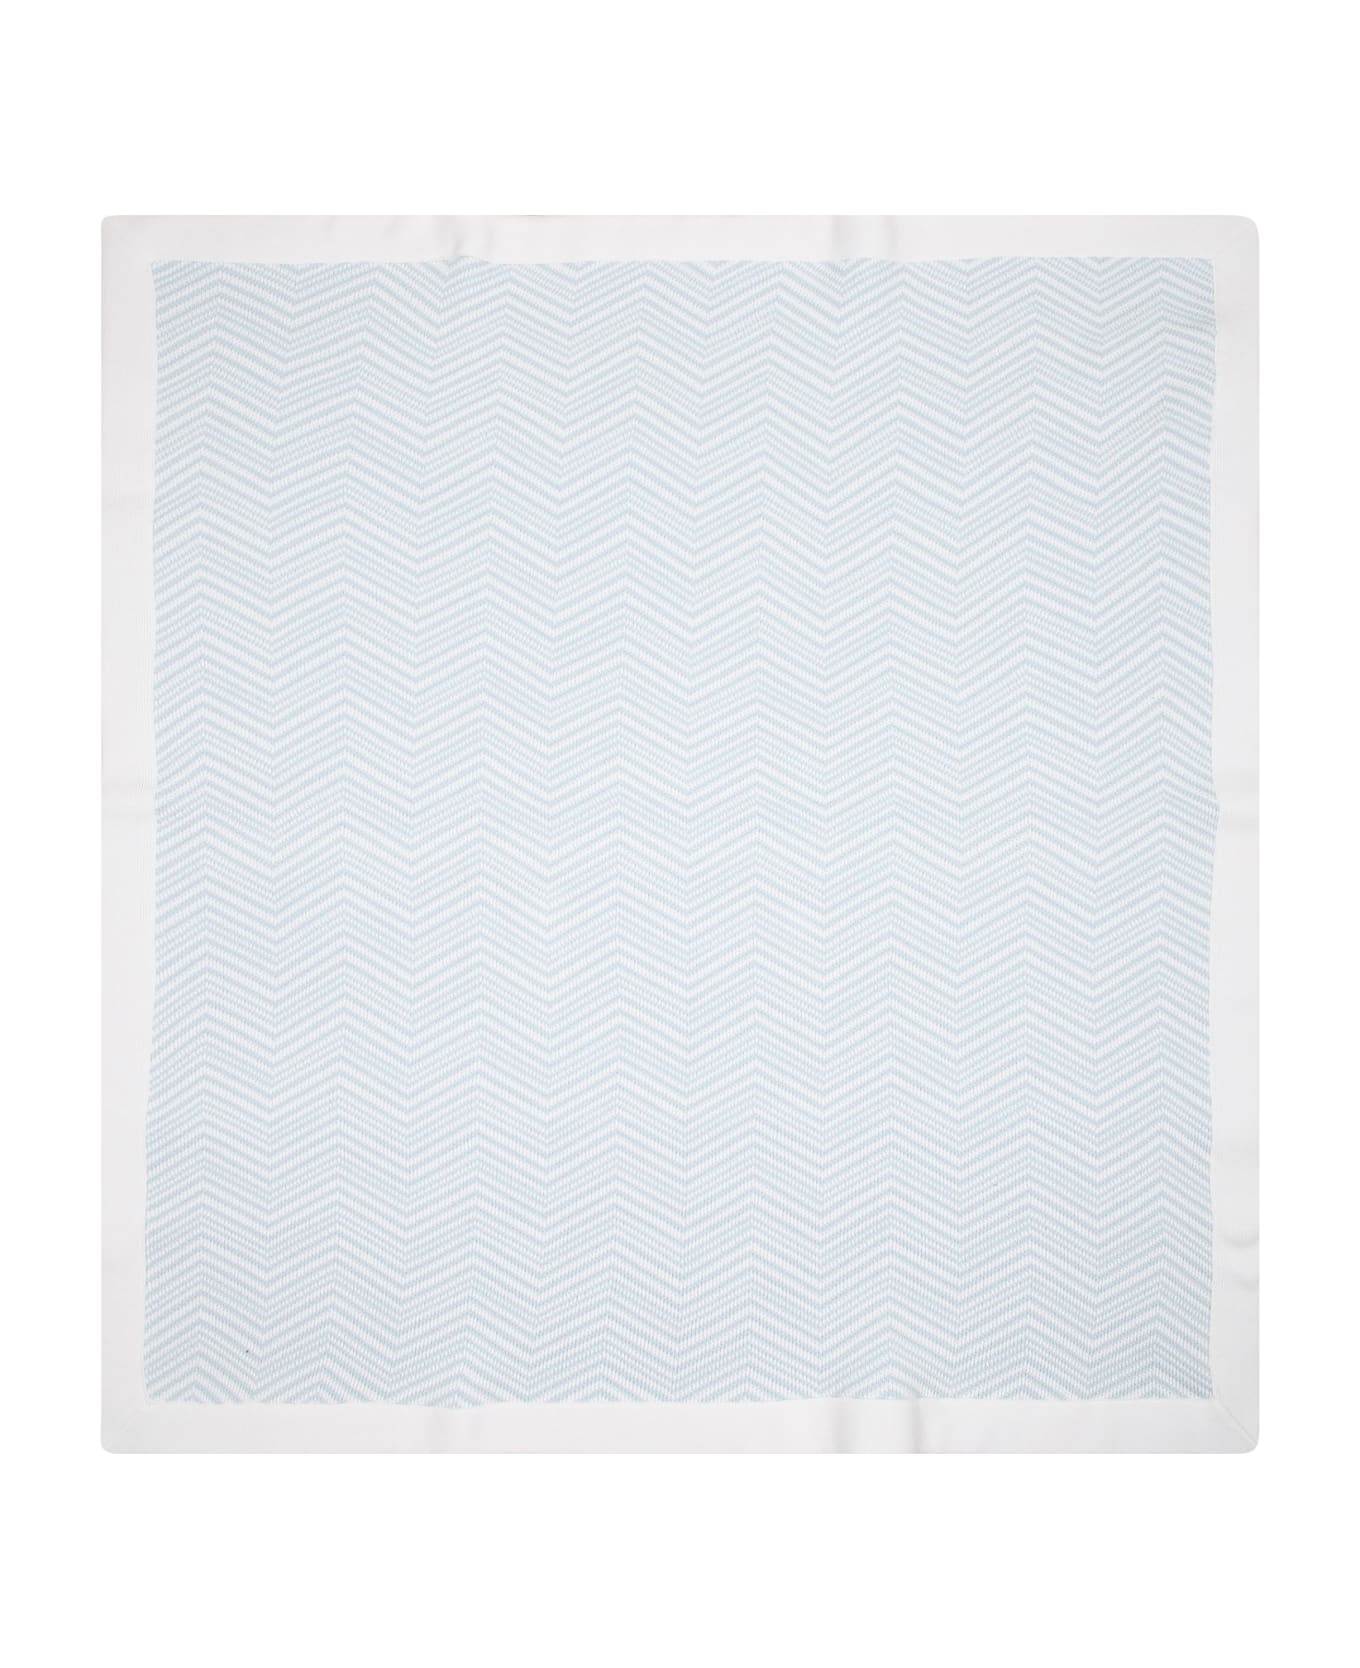 Missoni Light Blue Blanket For Baby Boy With Chevron Pattern - Light Blue